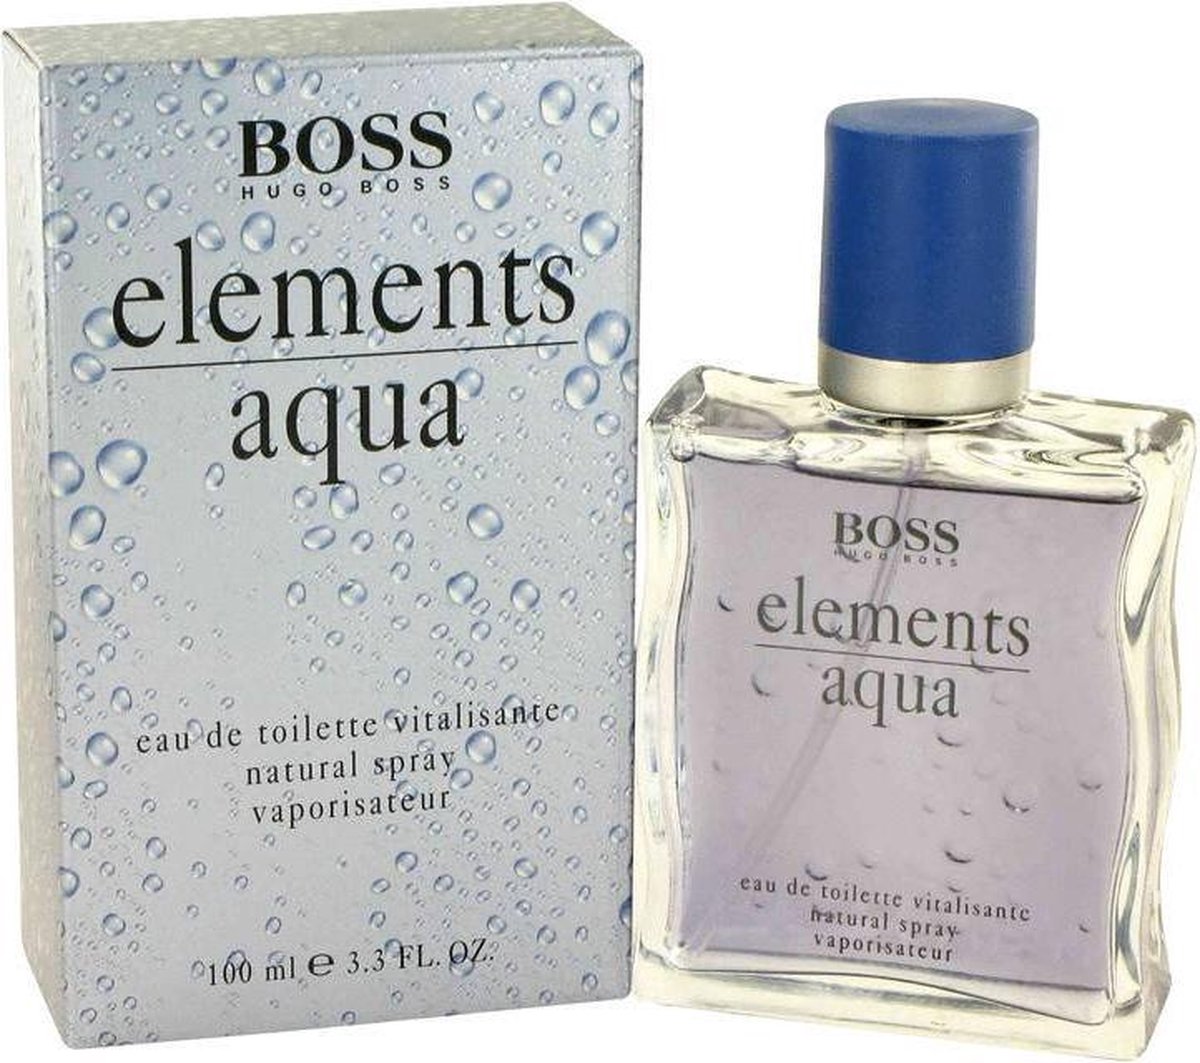 element aqua hugo boss 